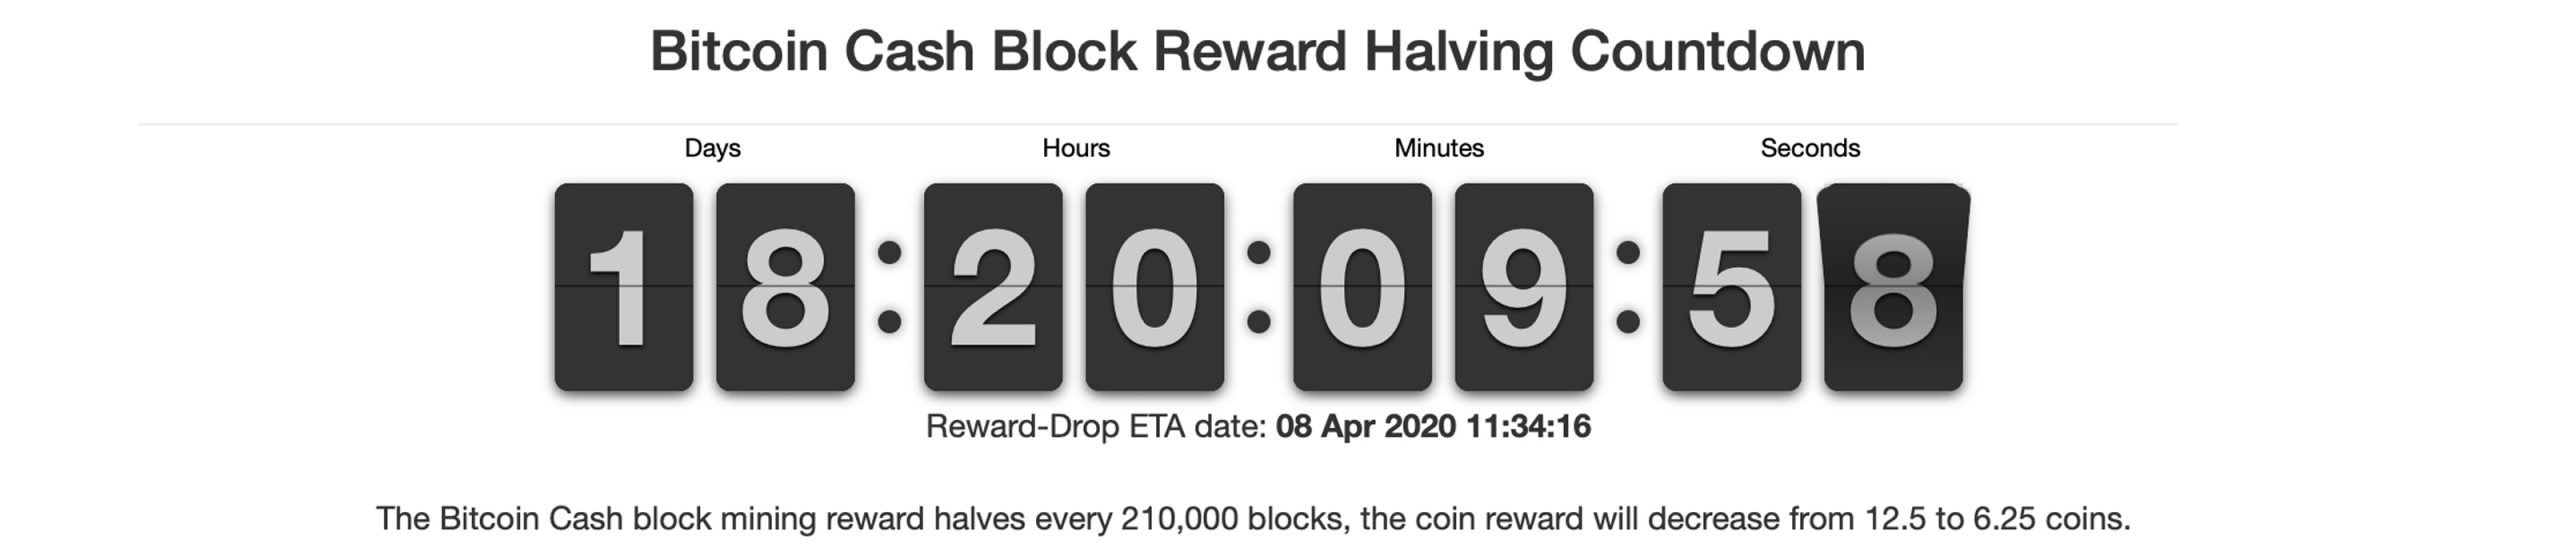 Countdown to Block Reward Reduction – 18 Days Until Bitcoin Cash Halving